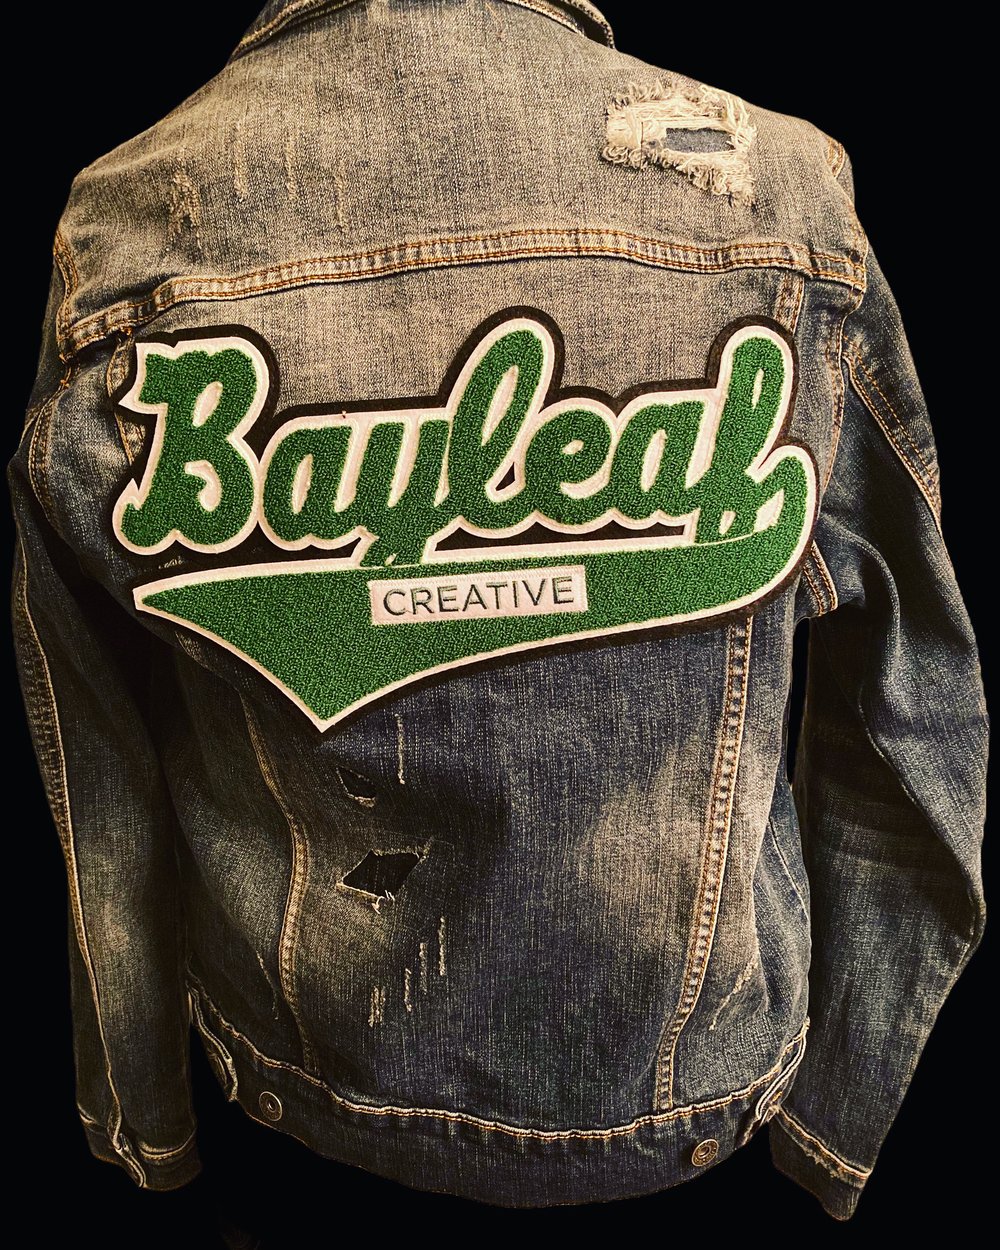 Image of Bayleaf Creative Distressed Jean Jacket 125.00